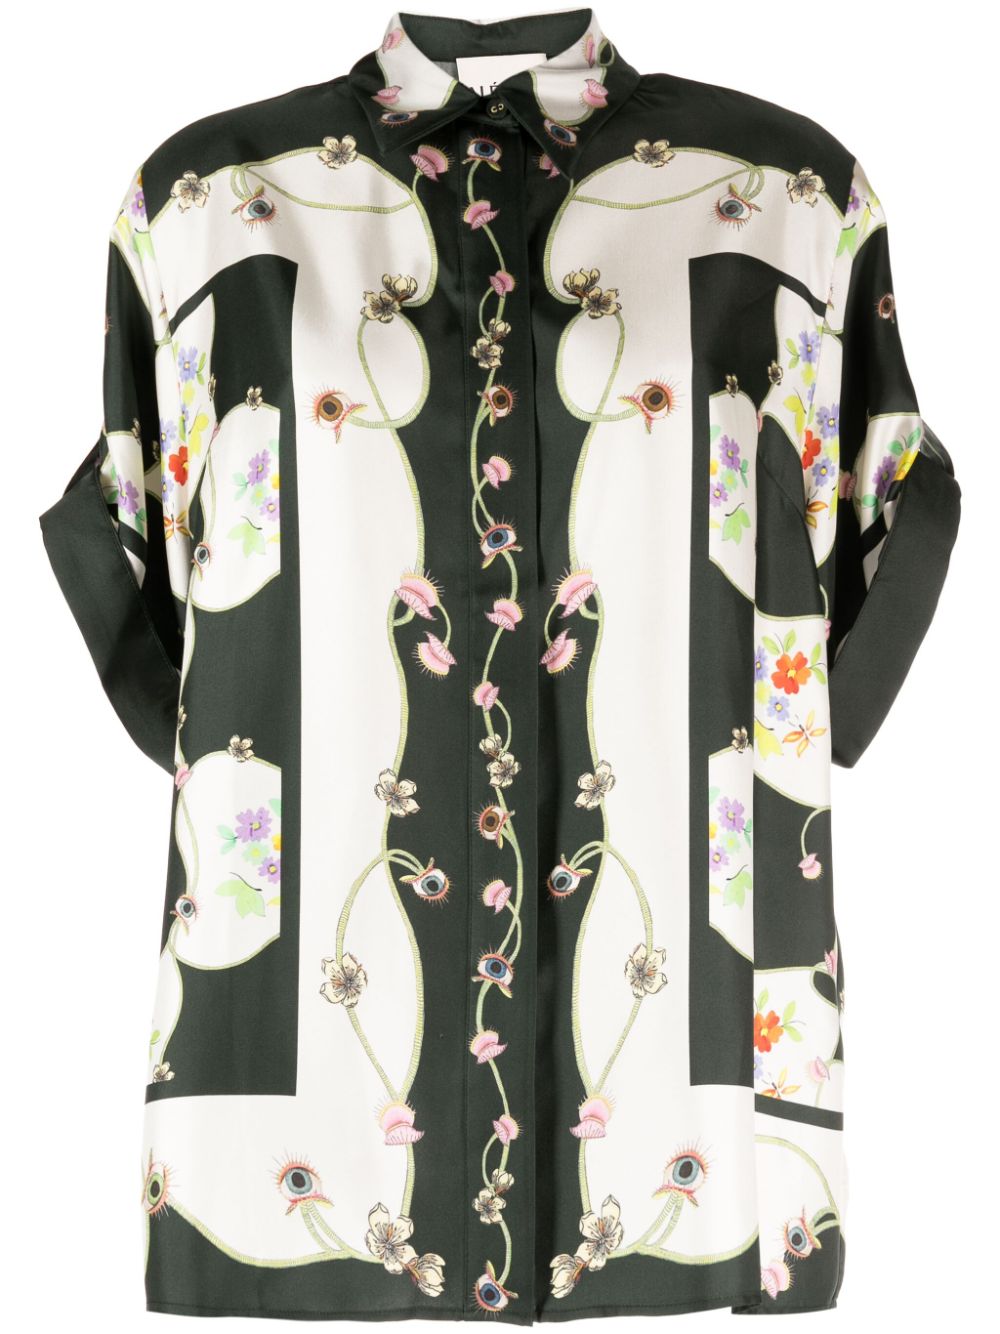 Camisa com estampa floral em cetim brilhante